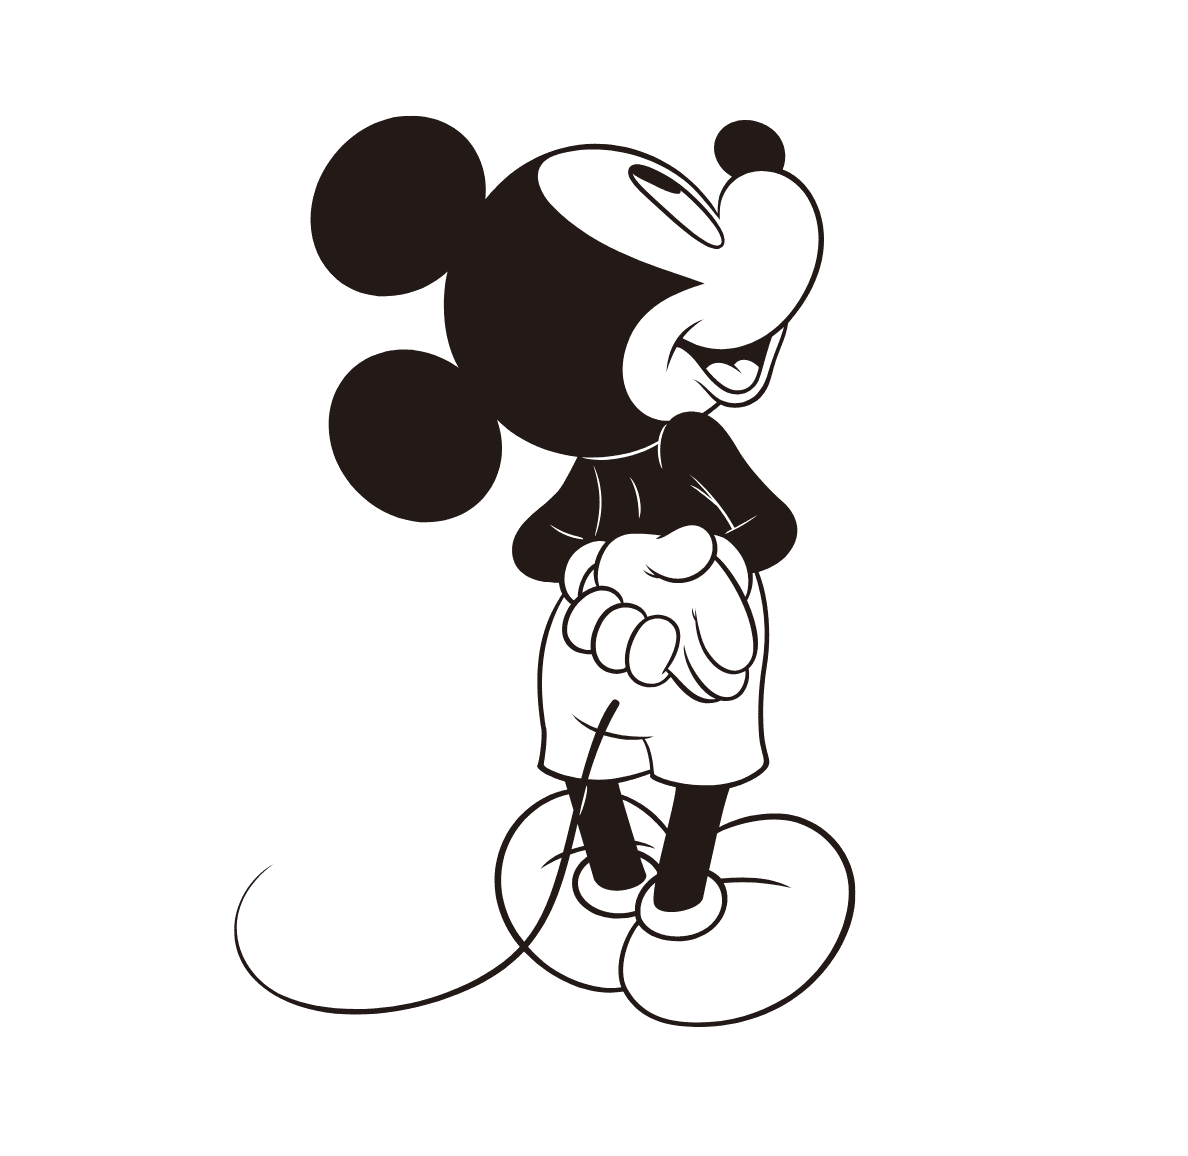 Un GIF animado de Mickey Mouse, que mira hacia arriba y hacia atrás, luego se da vuelta y baila de manera juguetona.